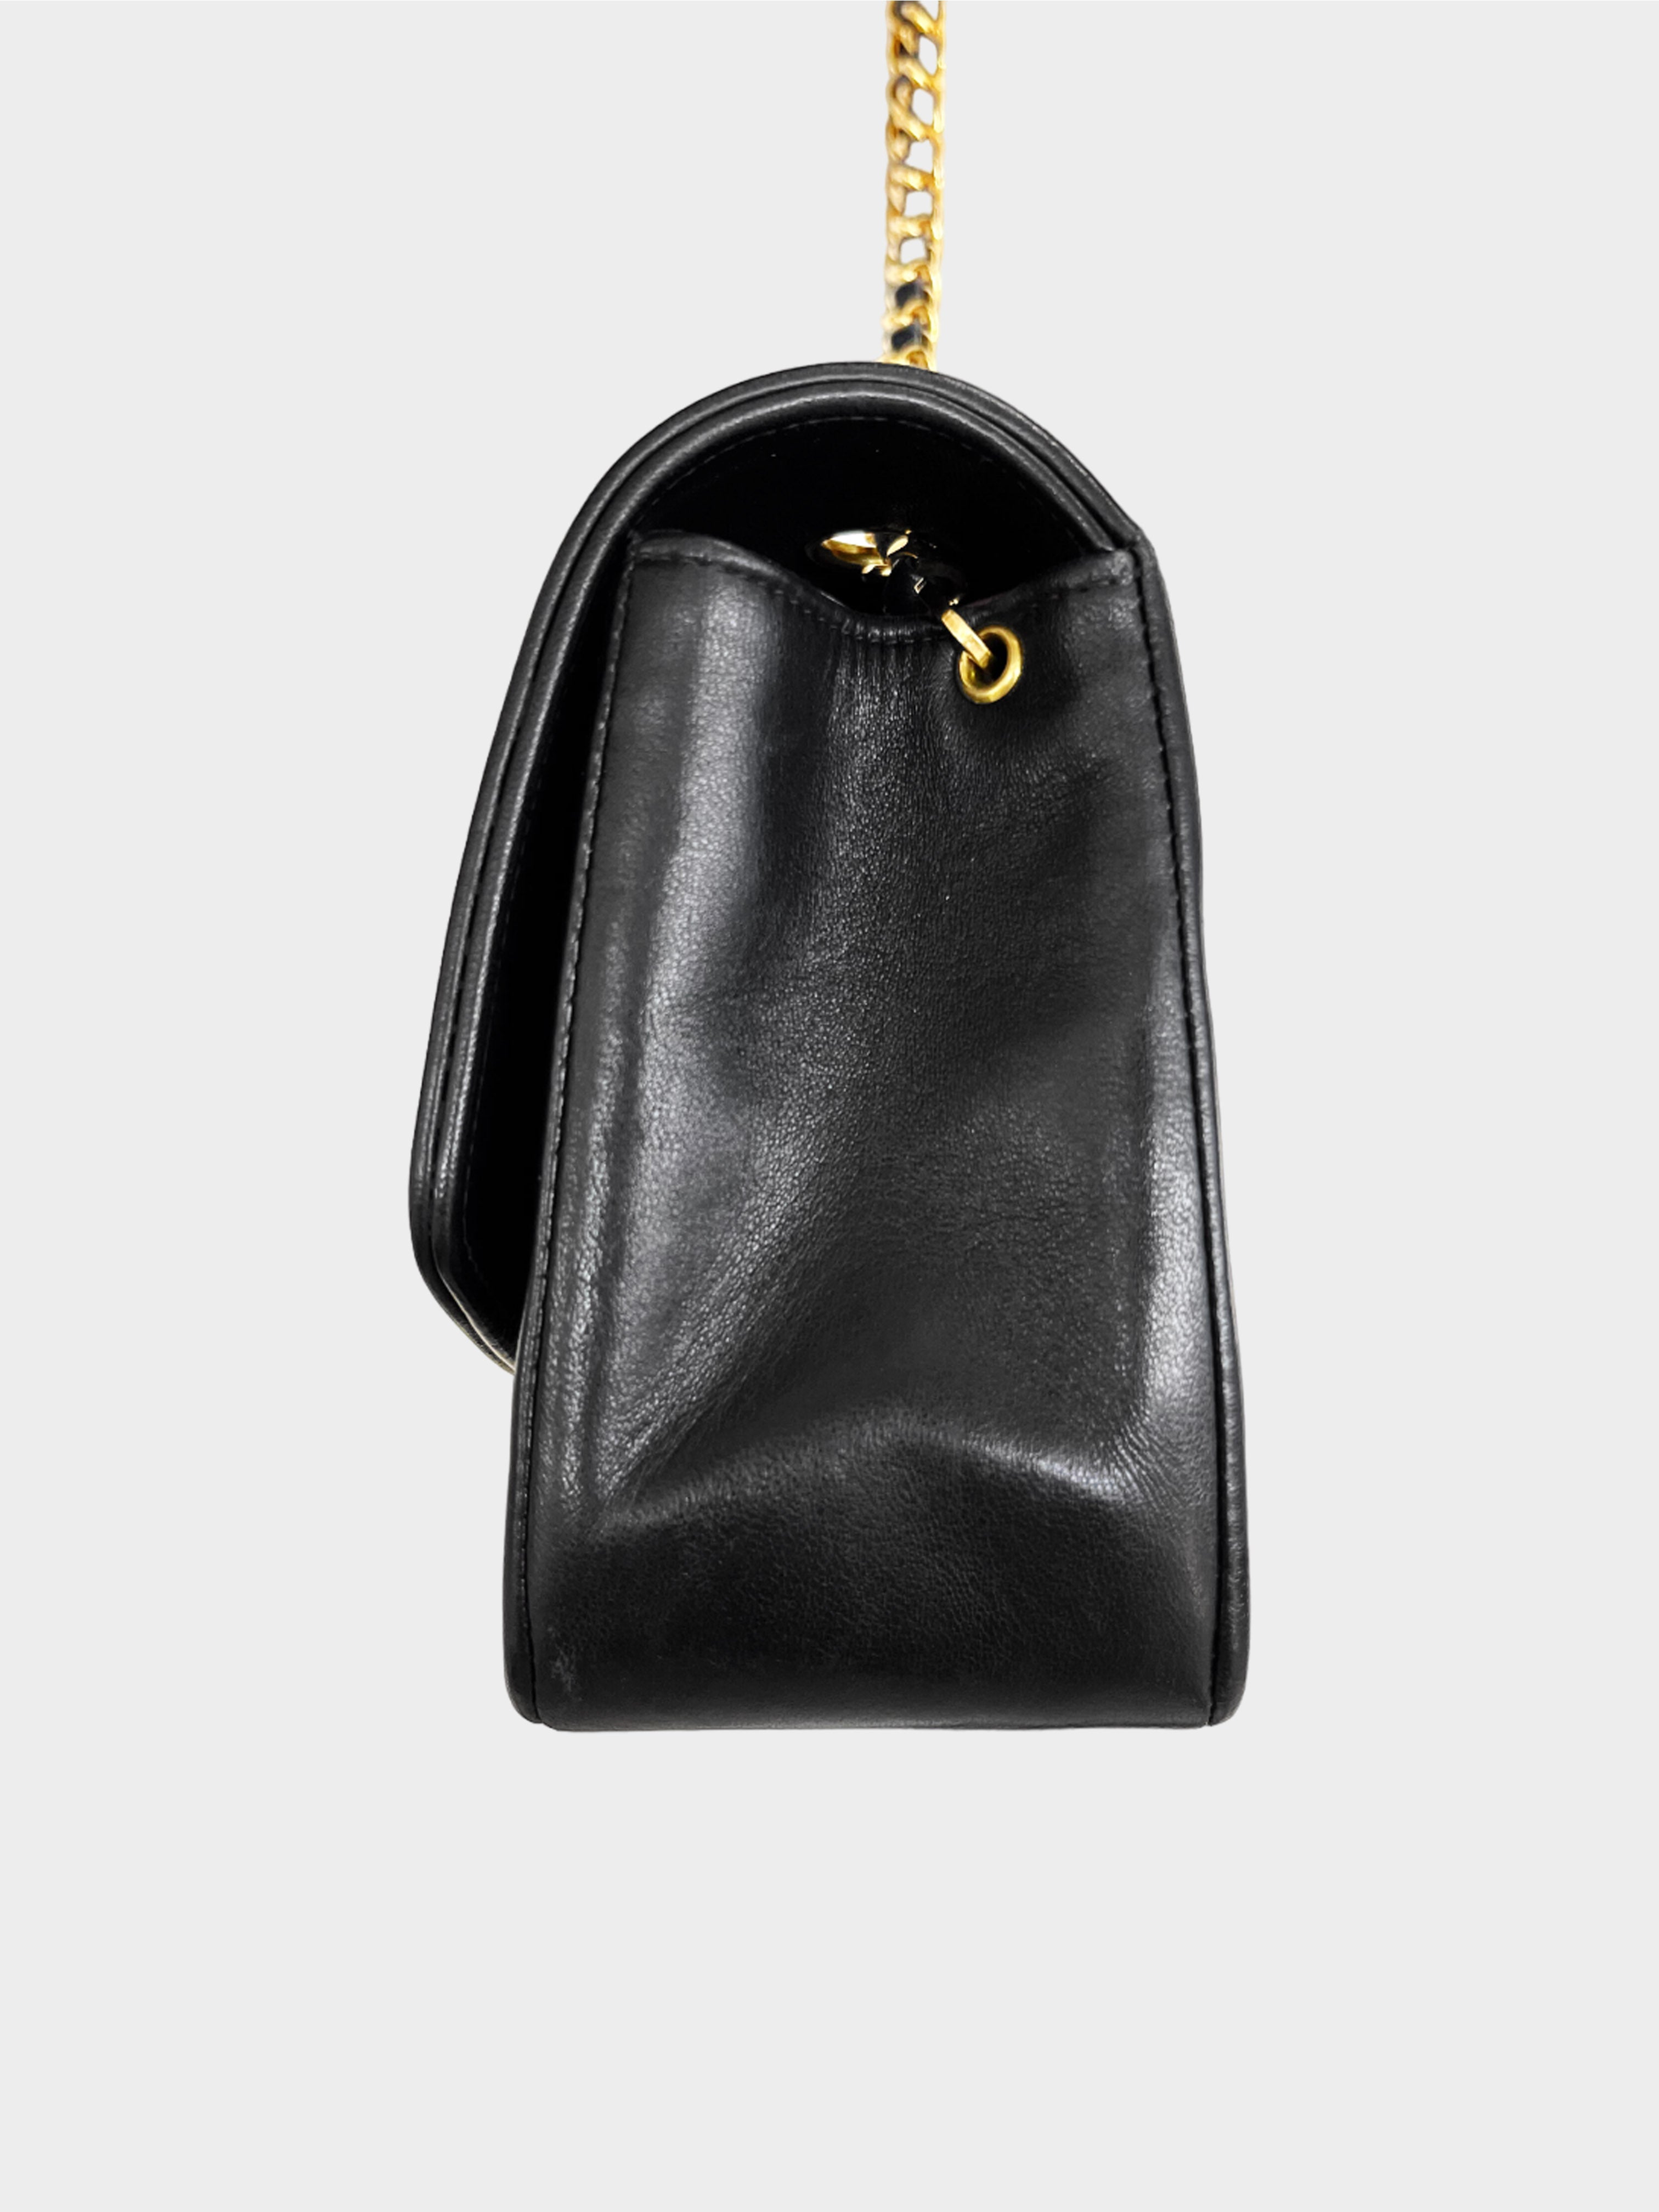 Chanel 1996 Black Lambskin Small Diana Flap Bag